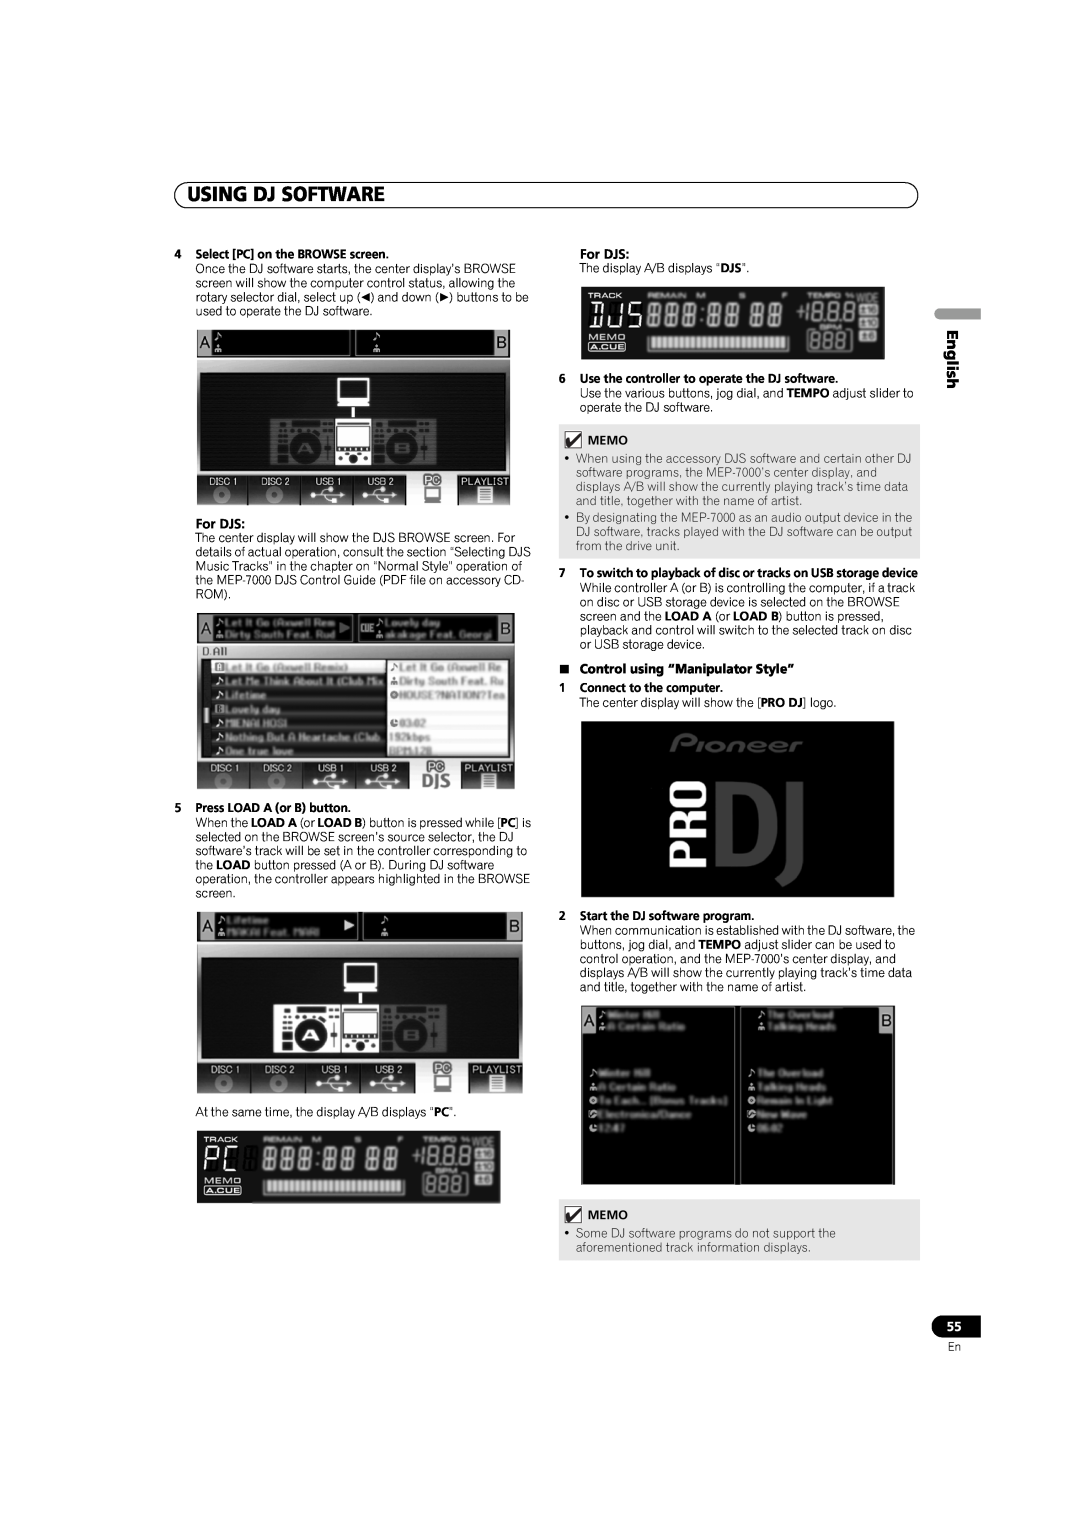 Pioneer MEP-7000 operating instructions Using Dj Software, English, For DJS, Control using “Manipulator Style” 